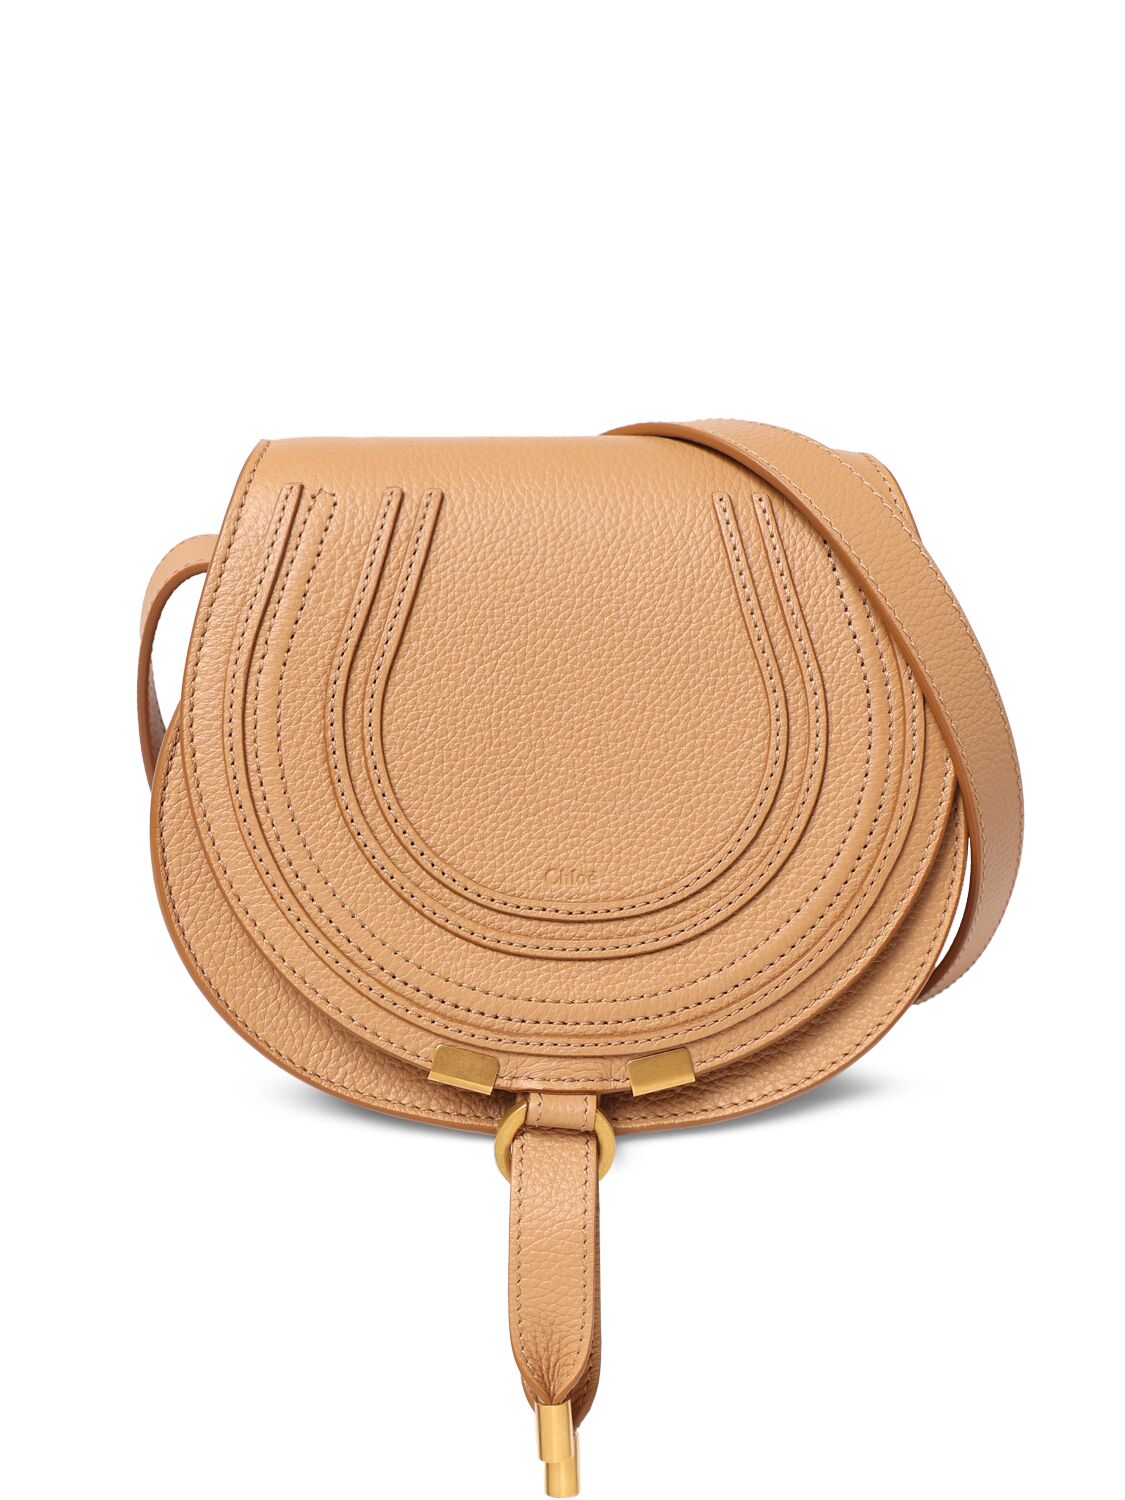 Chloé Marcie Grained Leather Shoulder Bag In Light Tan